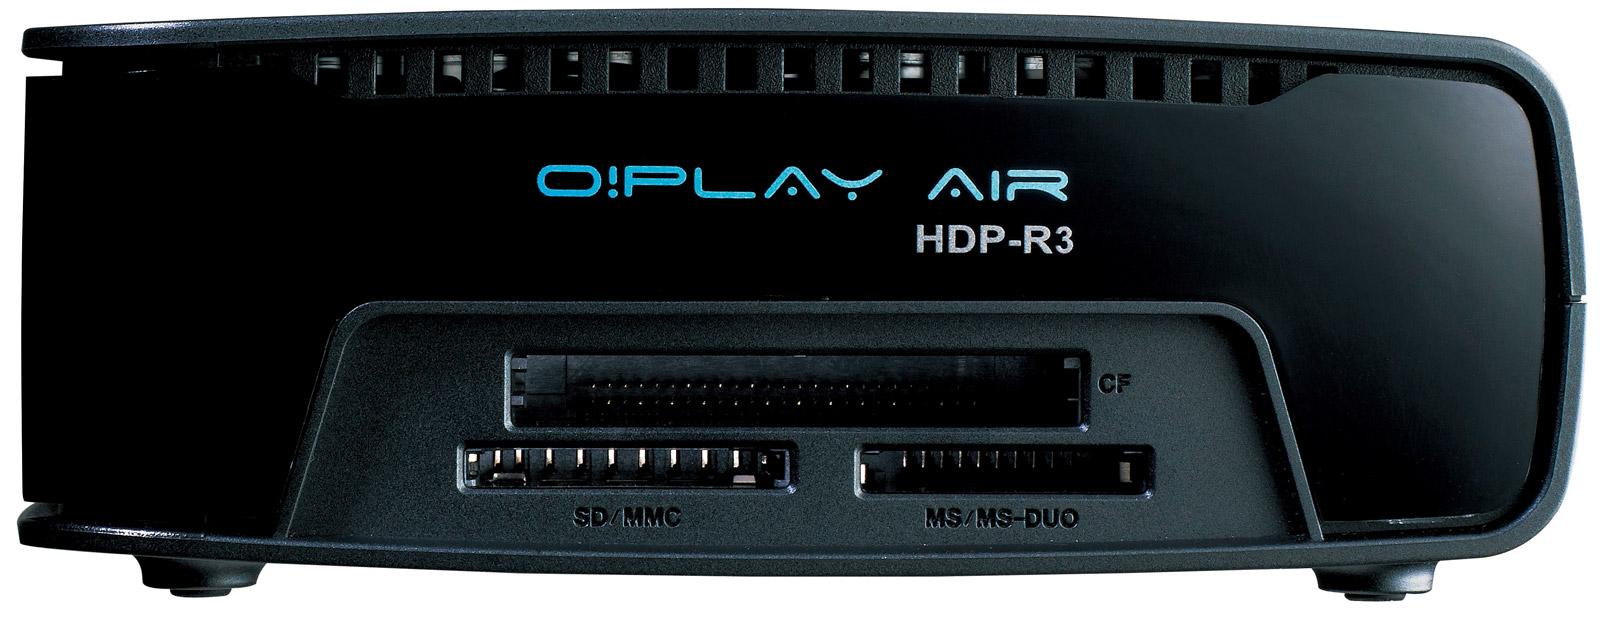 Asus O!Play Air HDP-R3 – multimediální tank se vším všudy